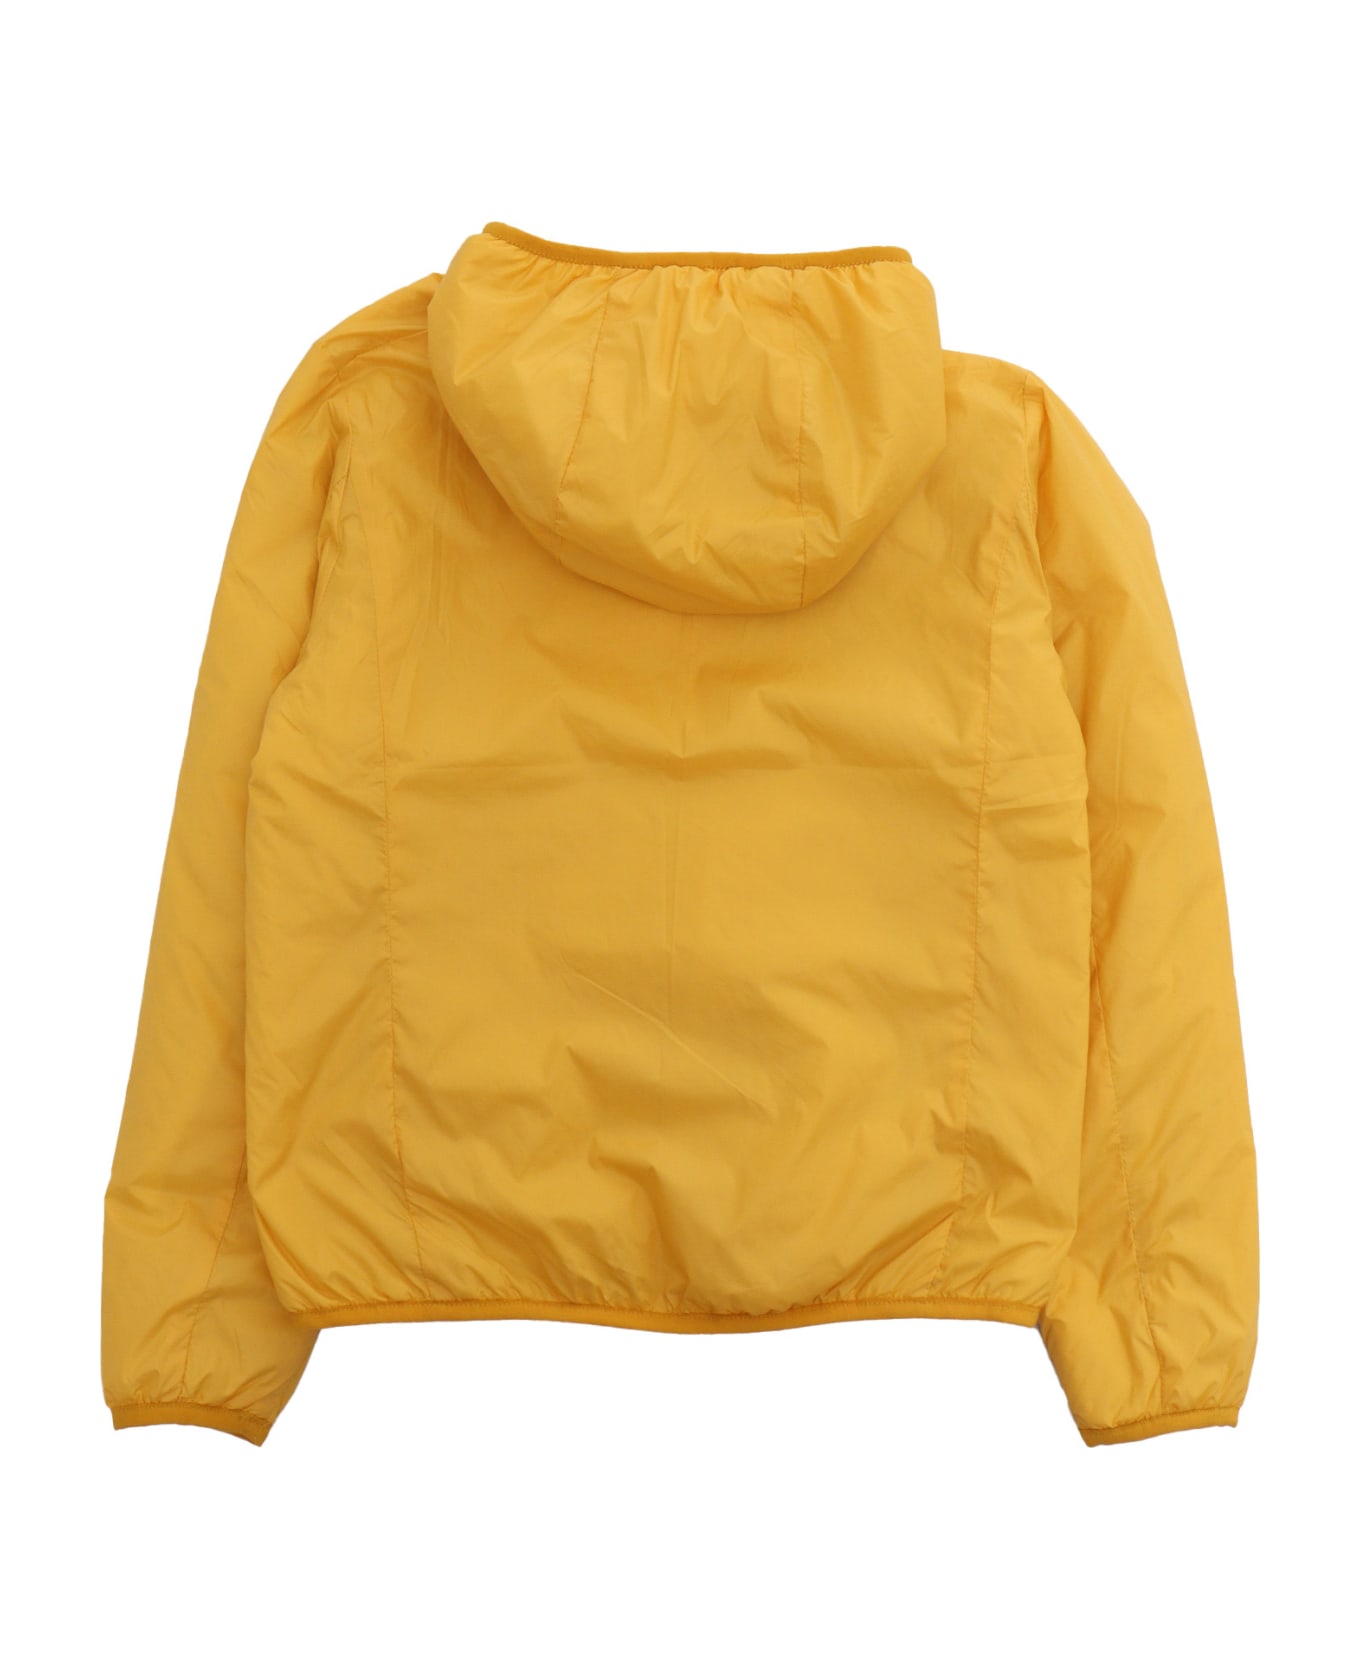 Save the Duck Yellow Shilo Jacket - YELLOW